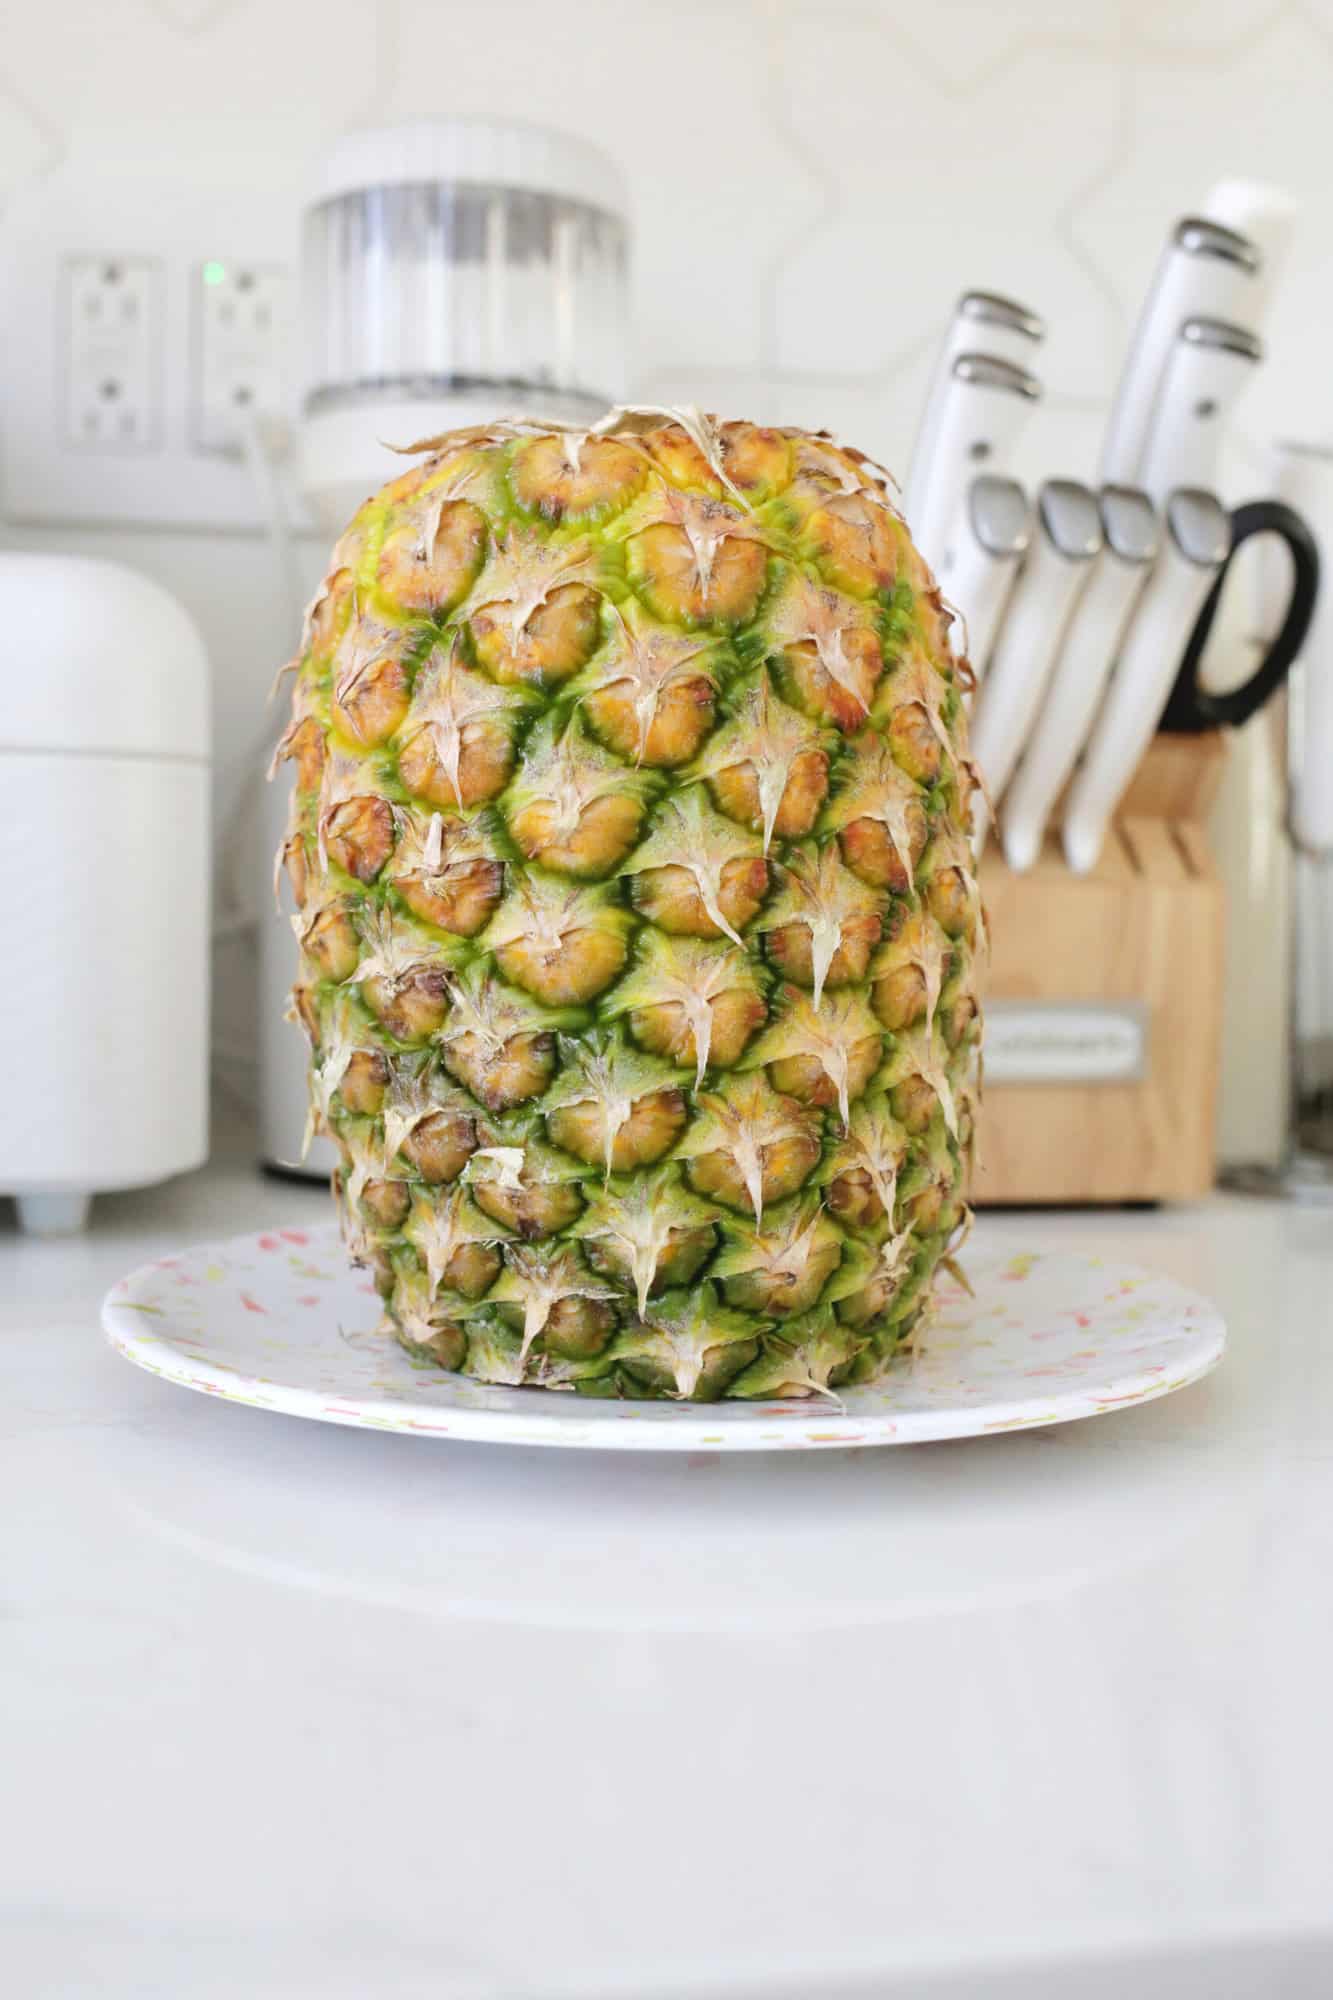 cut pineapple upside down on plate